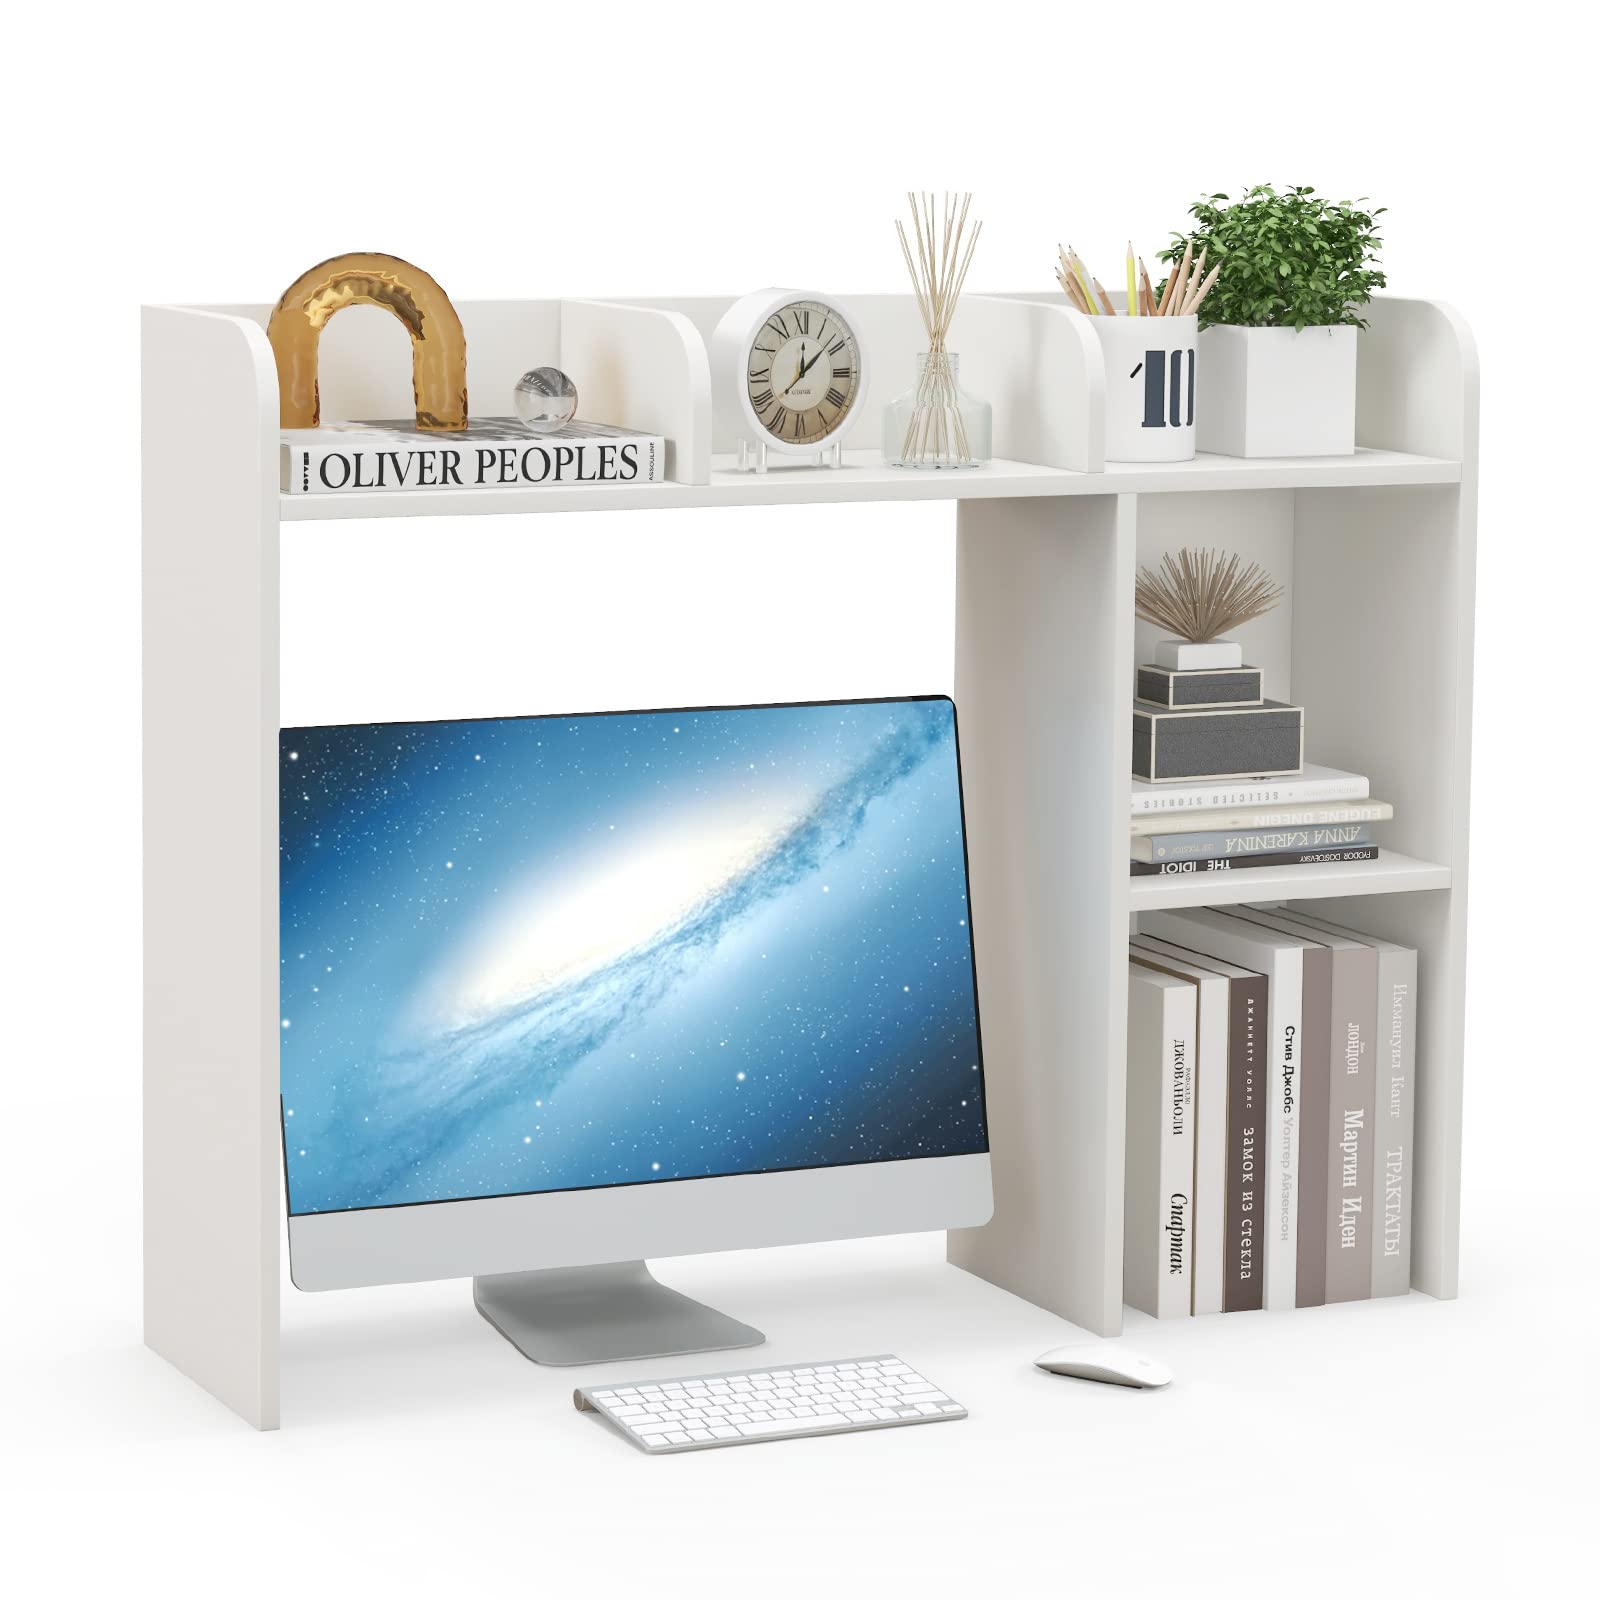 Giantex Desktop Bookshelf, Wood Desk Hutch Organizer for 27 Inch Computer Monitor